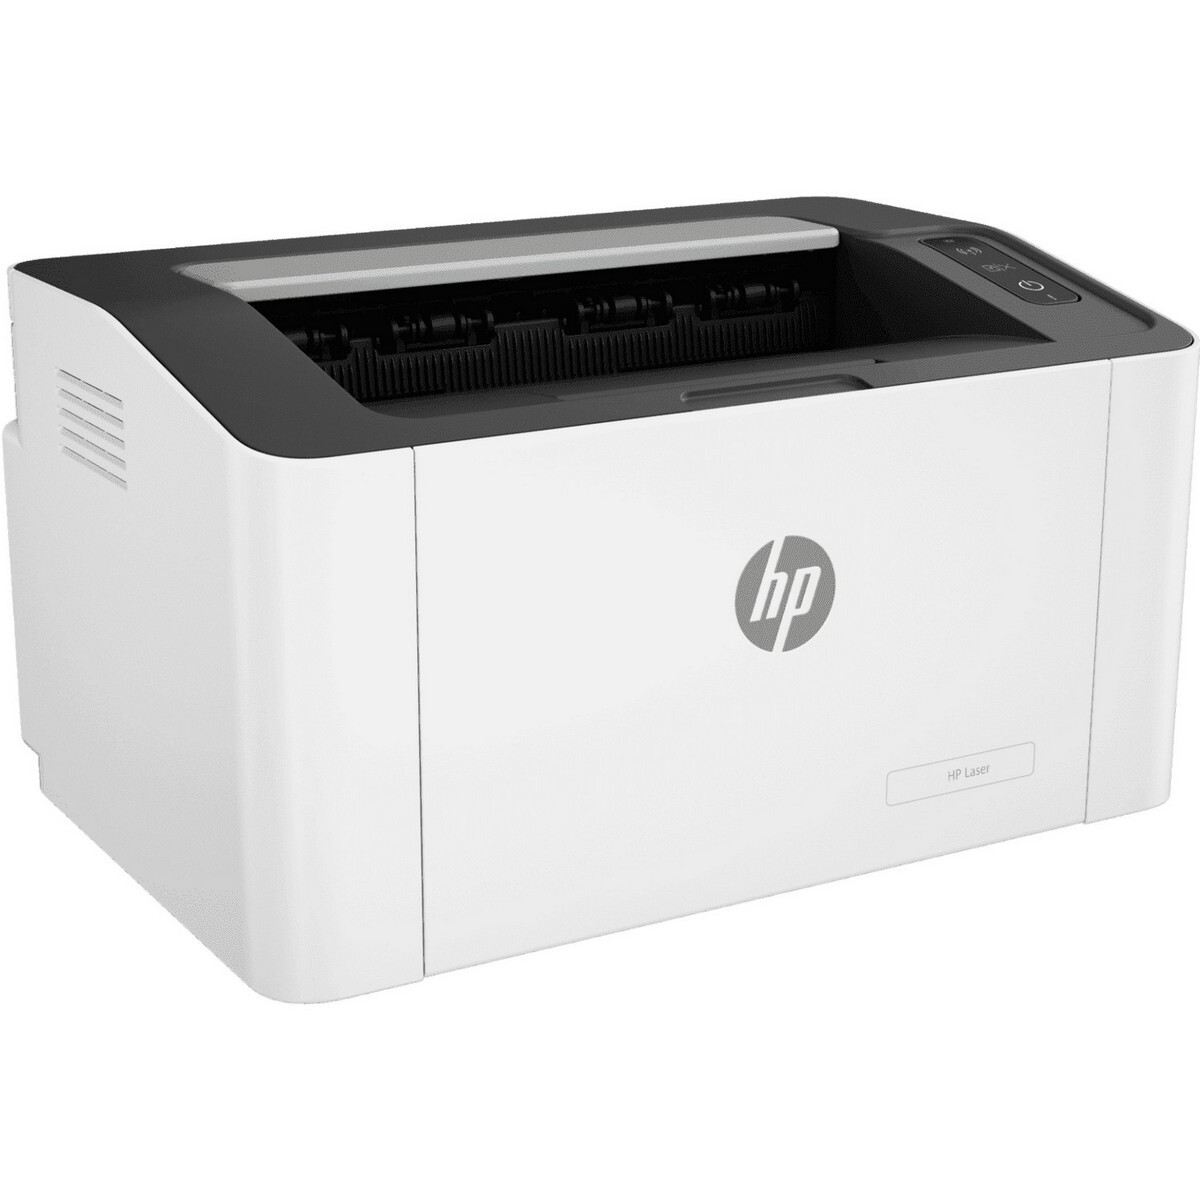 HP Laser Wireless Jet Printer 1008W Black and White